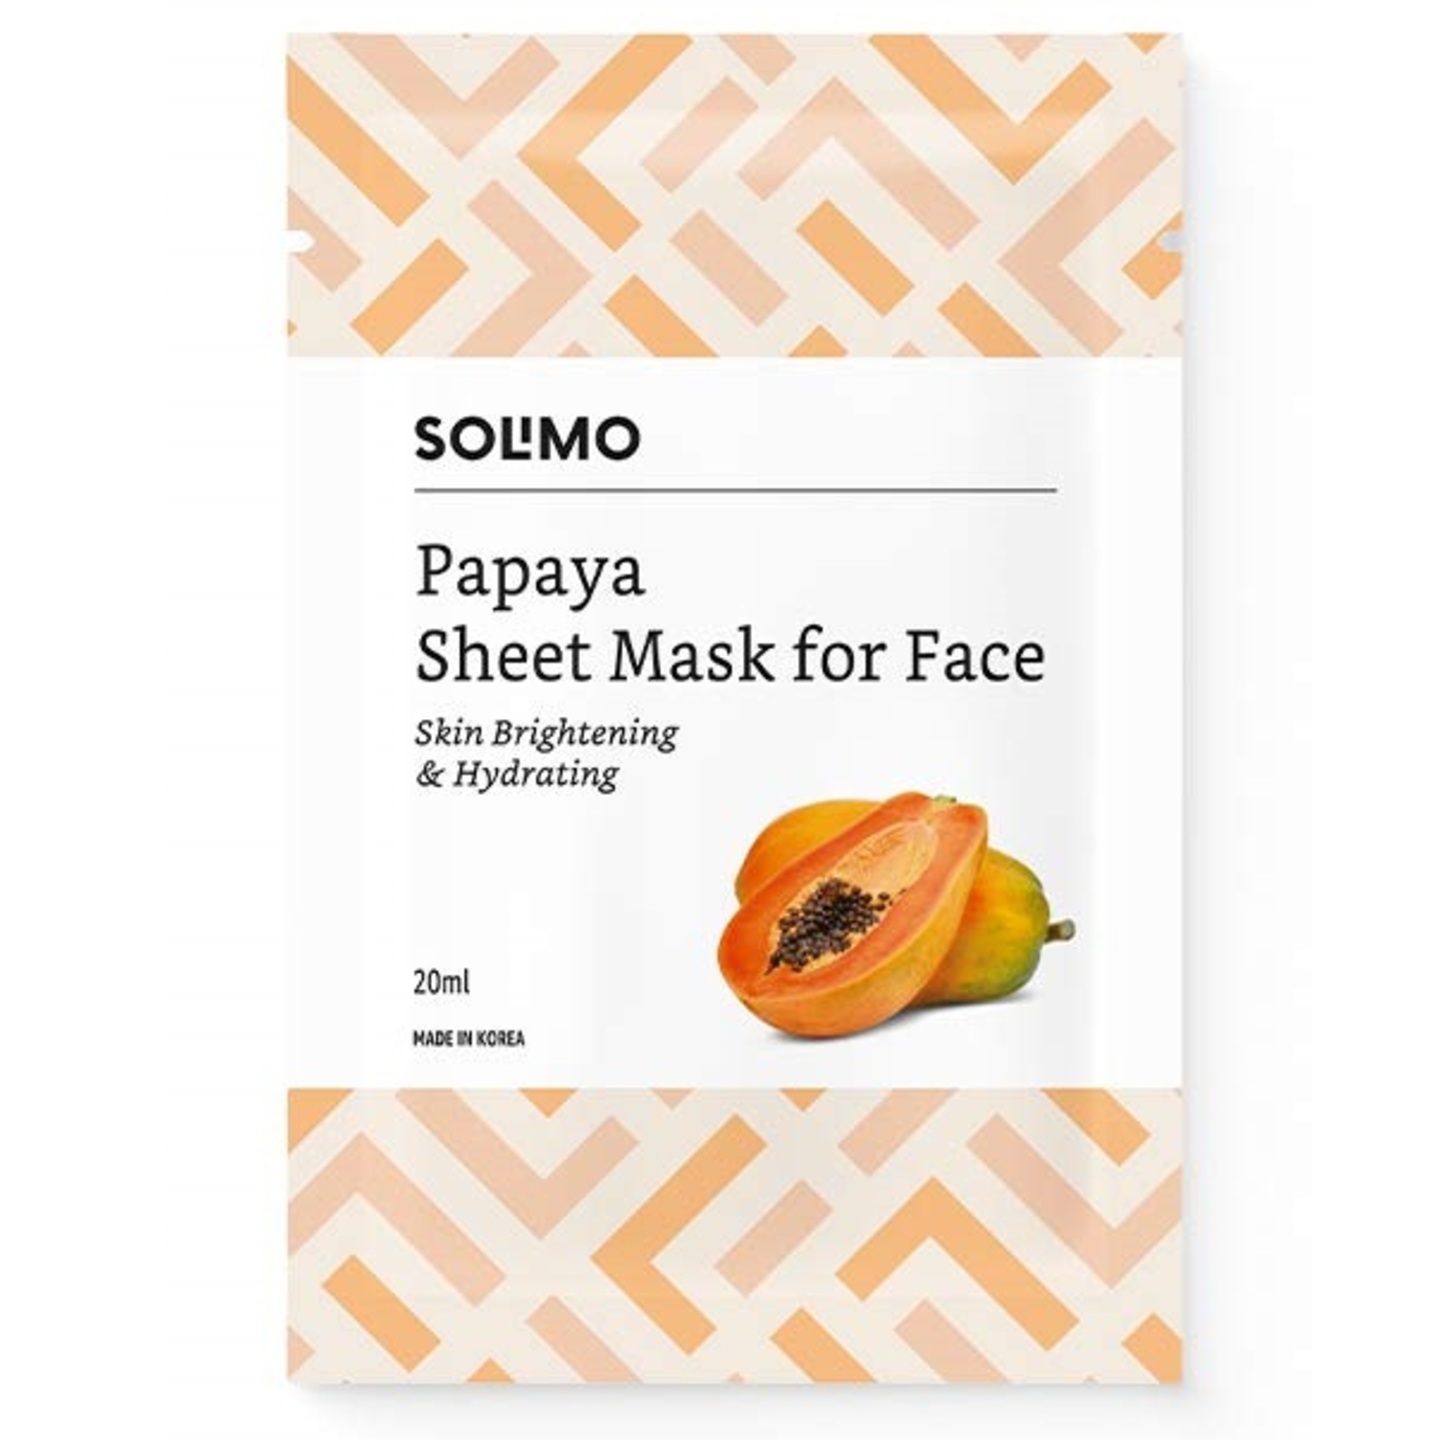 Papaya sheet mask for face